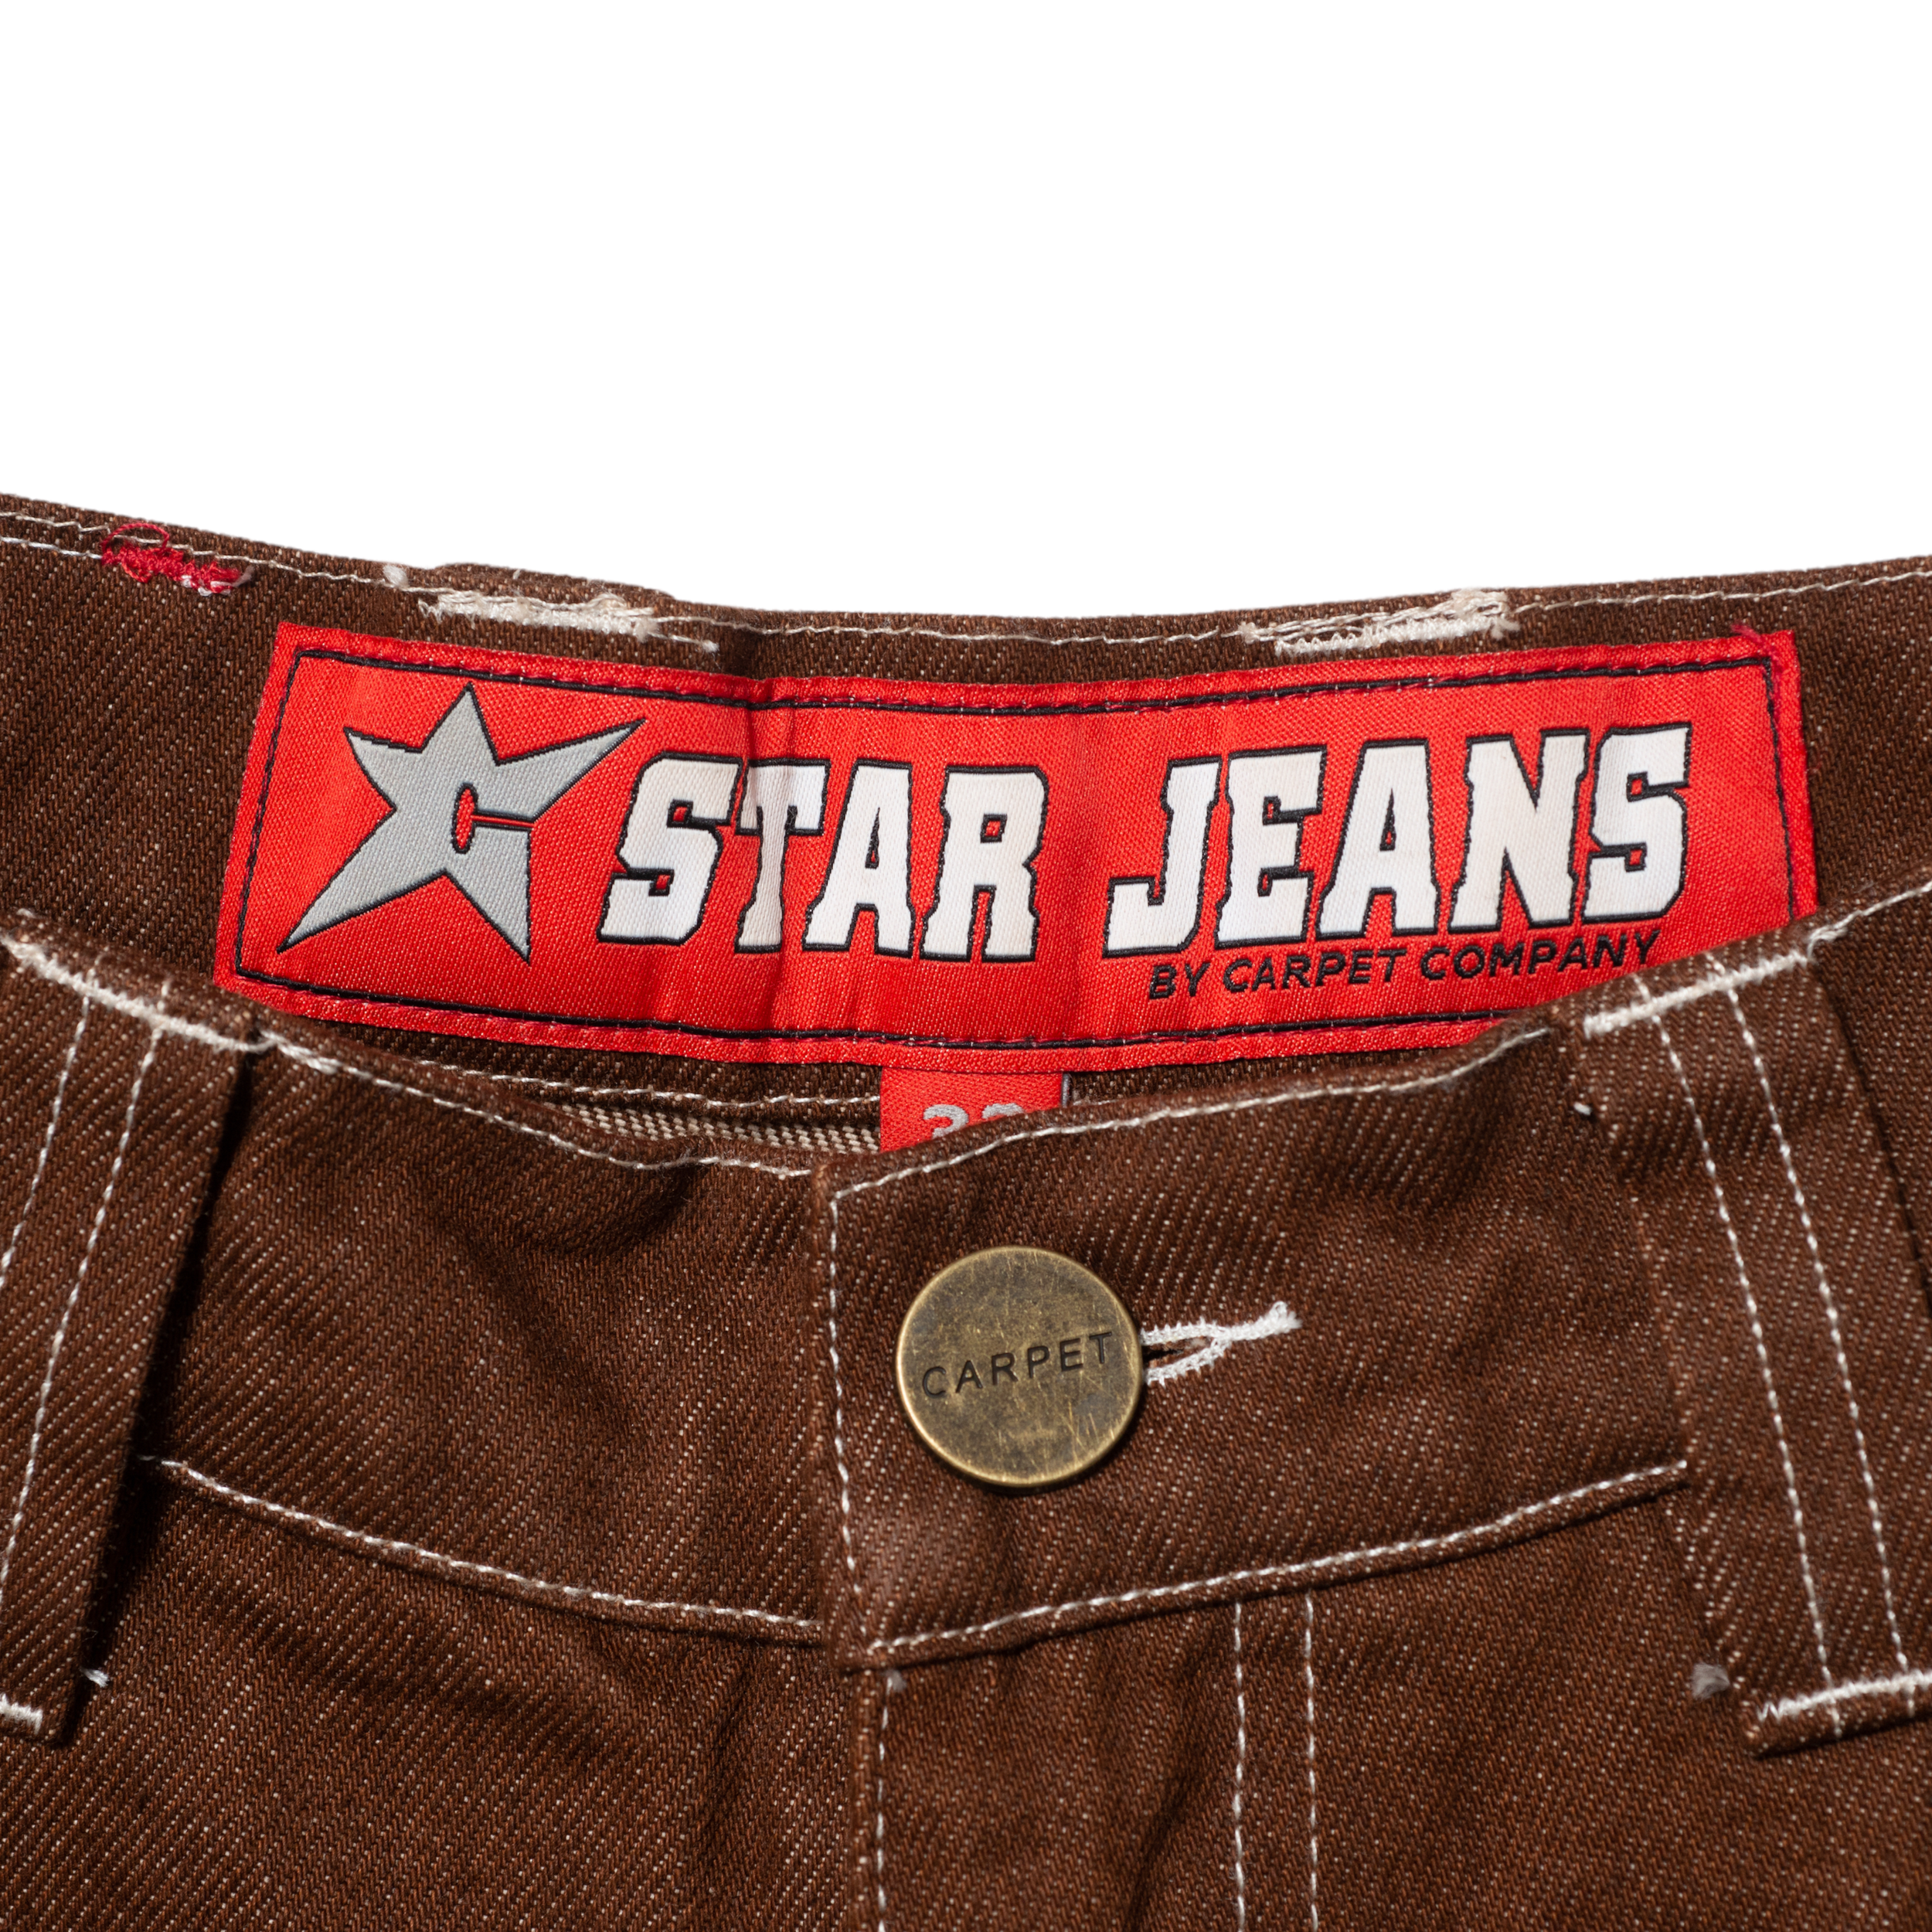 C-Star Jeans — Carpet Company